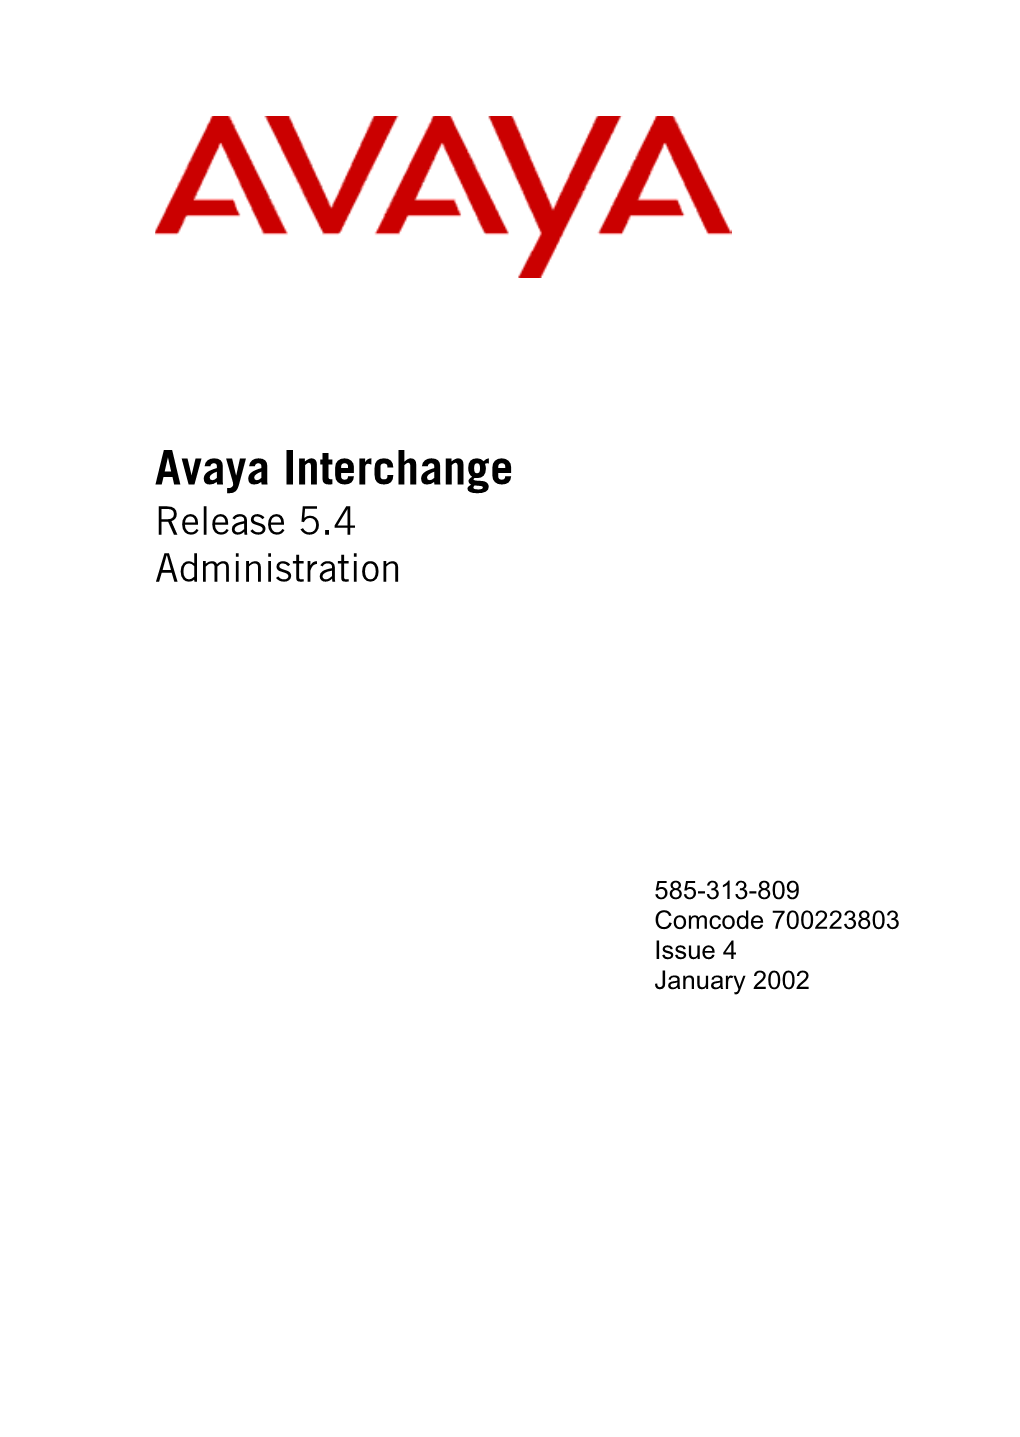 Avaya Interchange Release 5.4 Administration